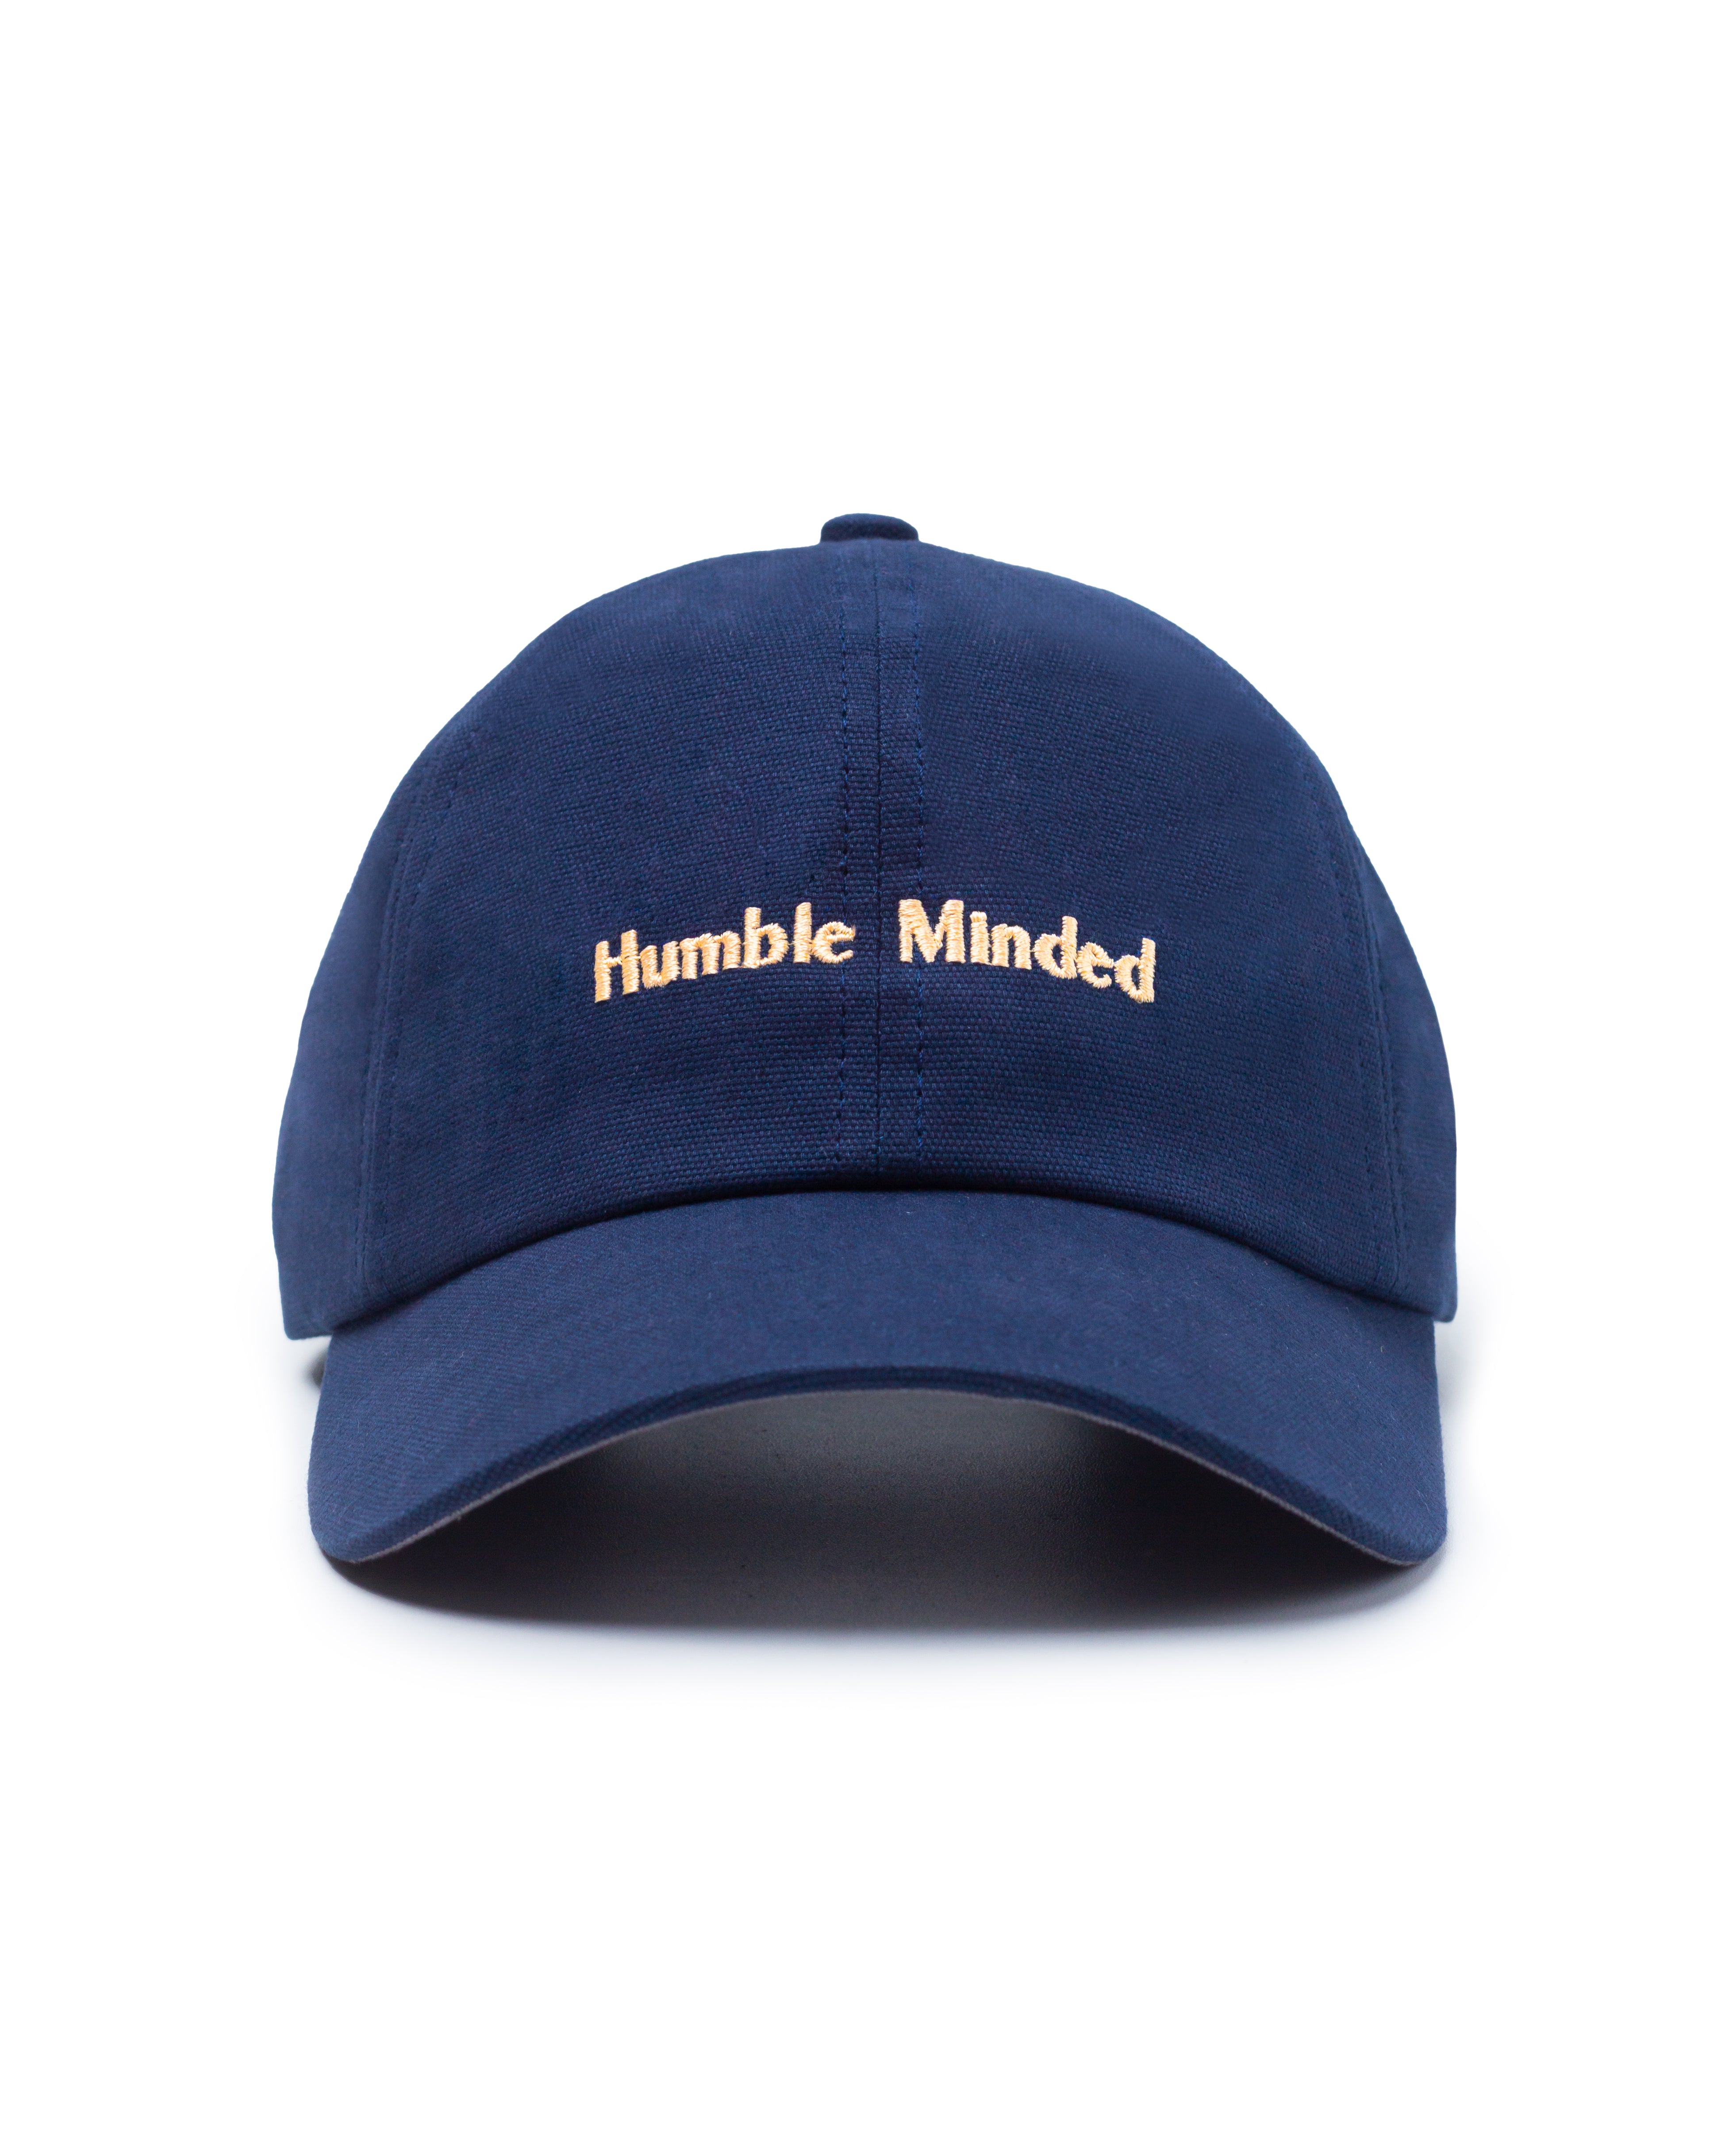 Classic Navy Logo Cap – Minded Humble